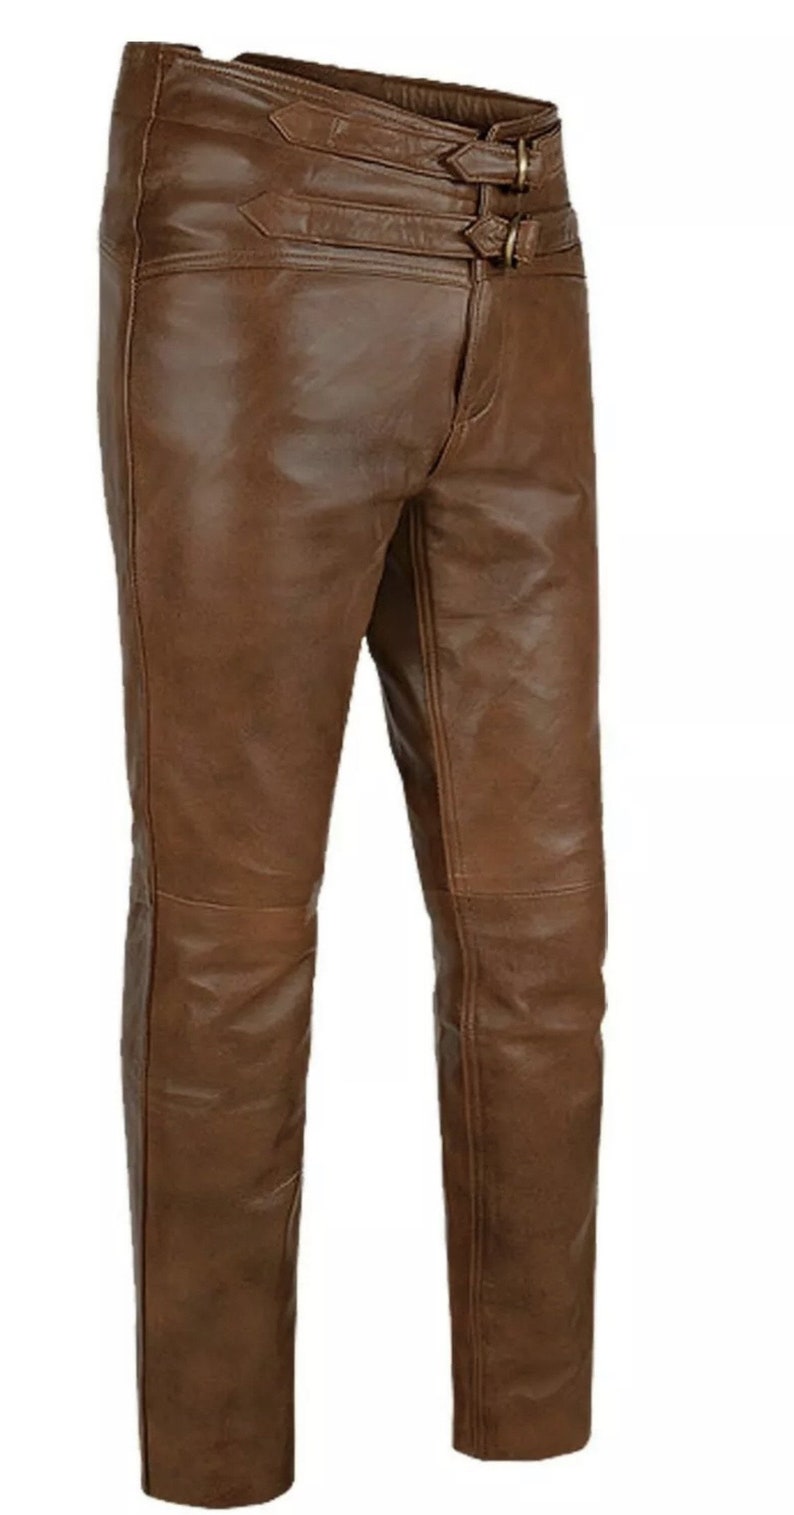 Men's Brown Genuine Leather slim fit Biker trouser pants | Etsy